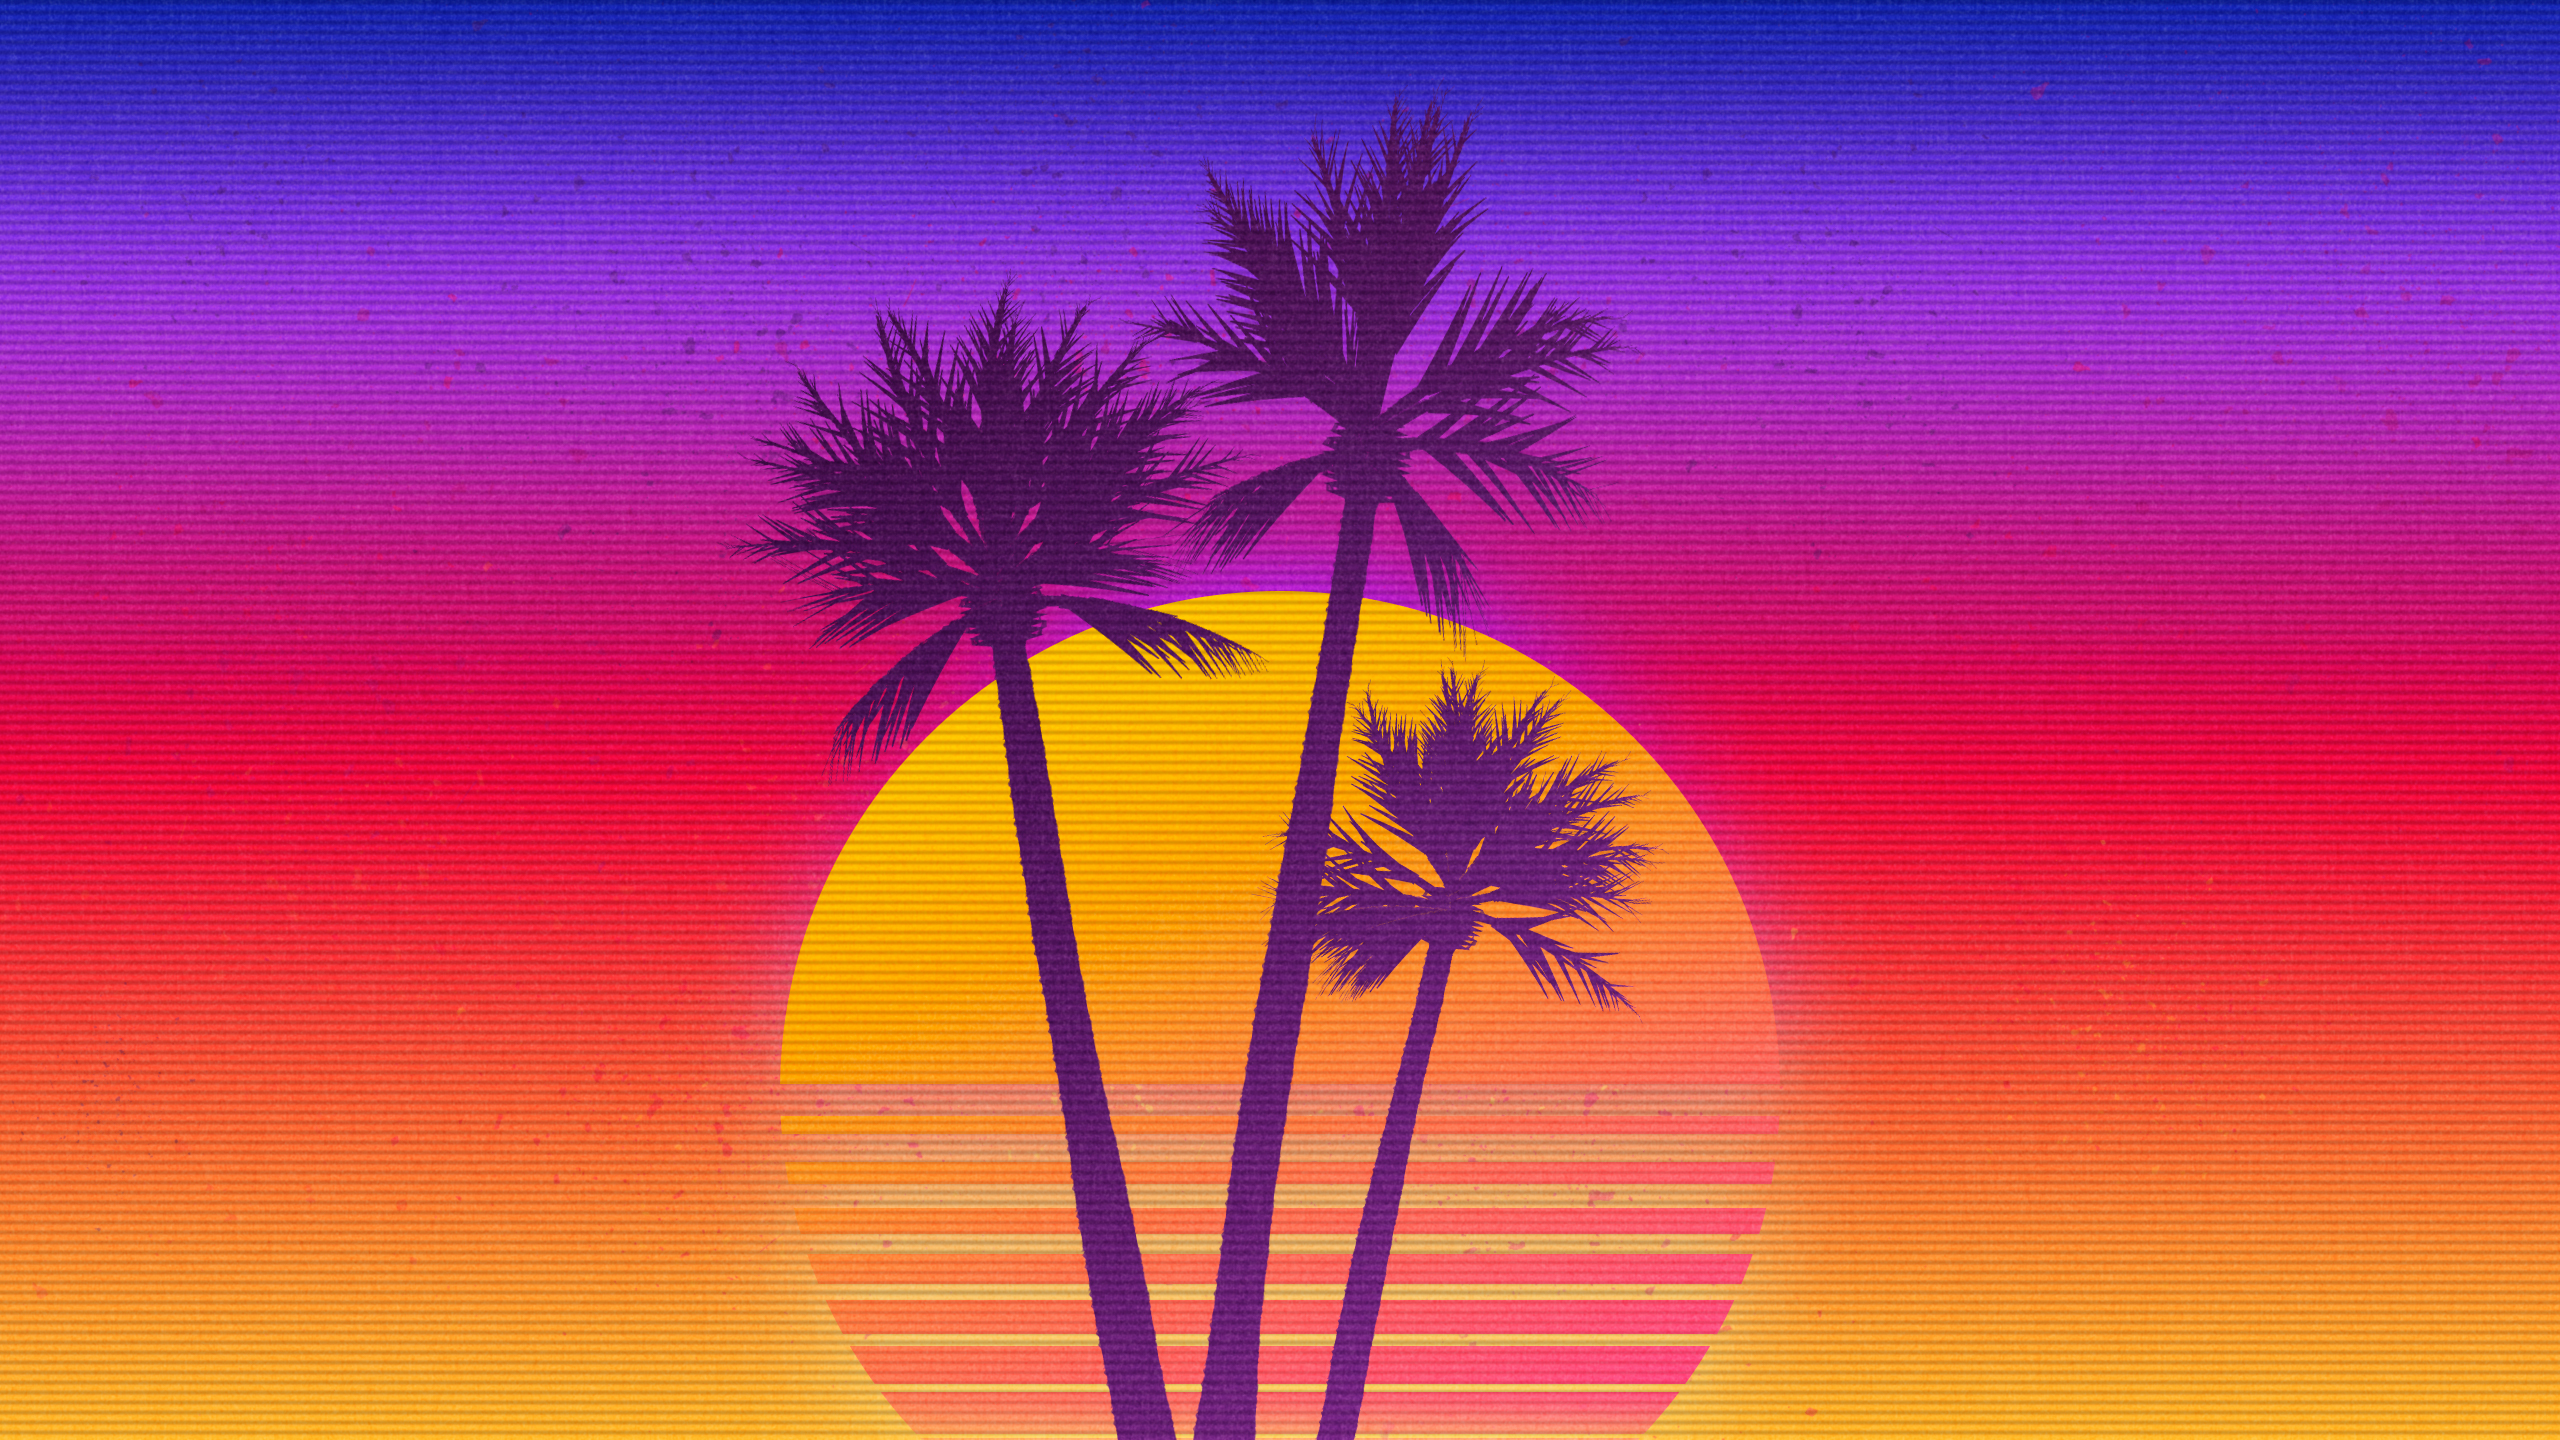 Synthwave OutRun Vaporwave Retrowave Sunset Palm Trees Digital Art 2560x1440